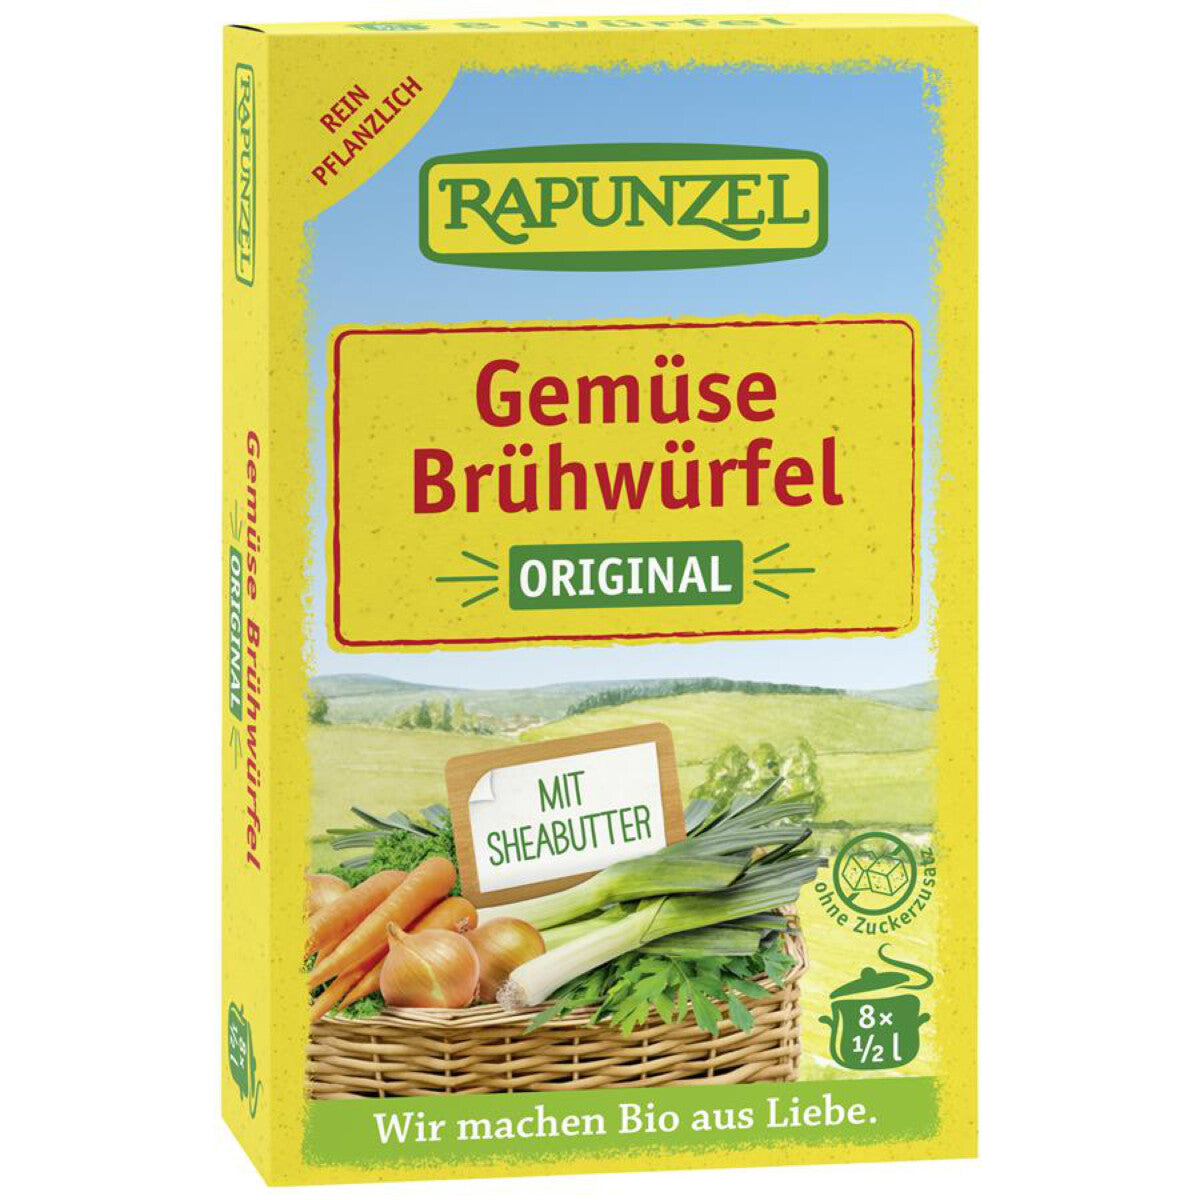 RAPUNZEL Gemüse Brühwürfel Original mit Hefe – 84 g